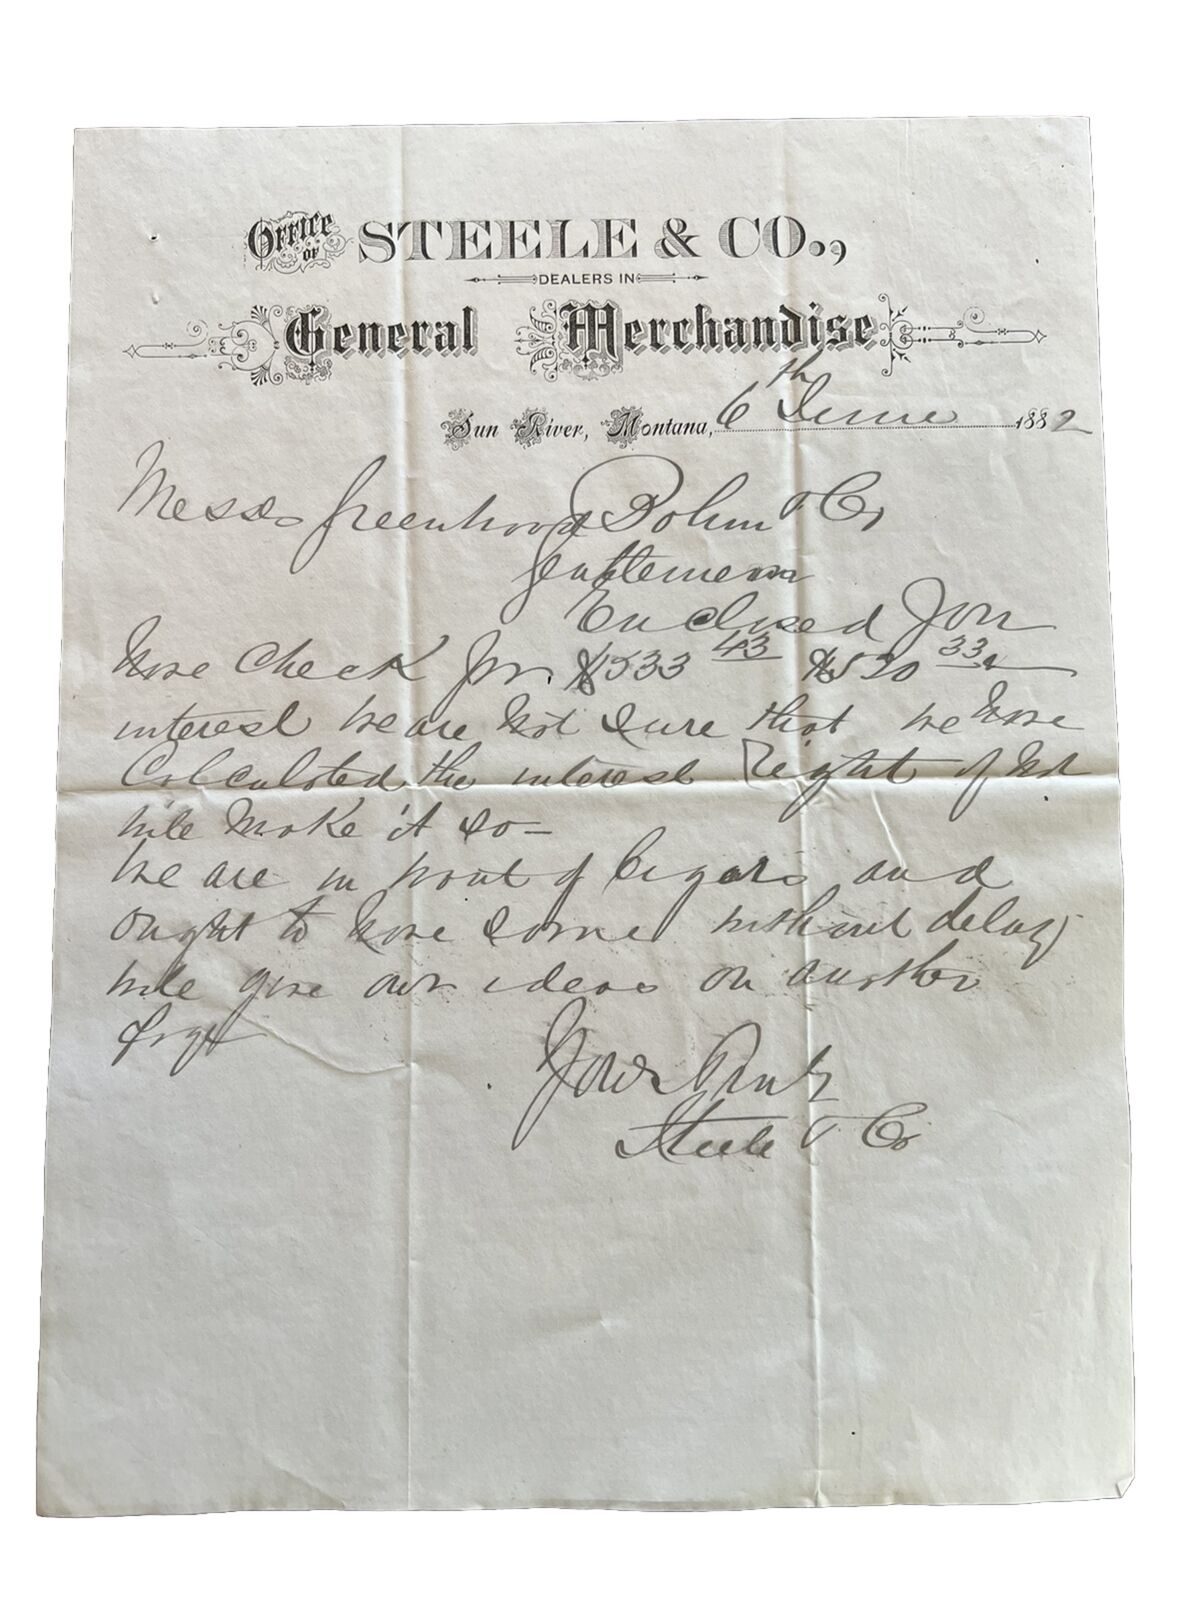 Original 1882 Sun River, MT Letterhead: Steele & Co. General Merchandise